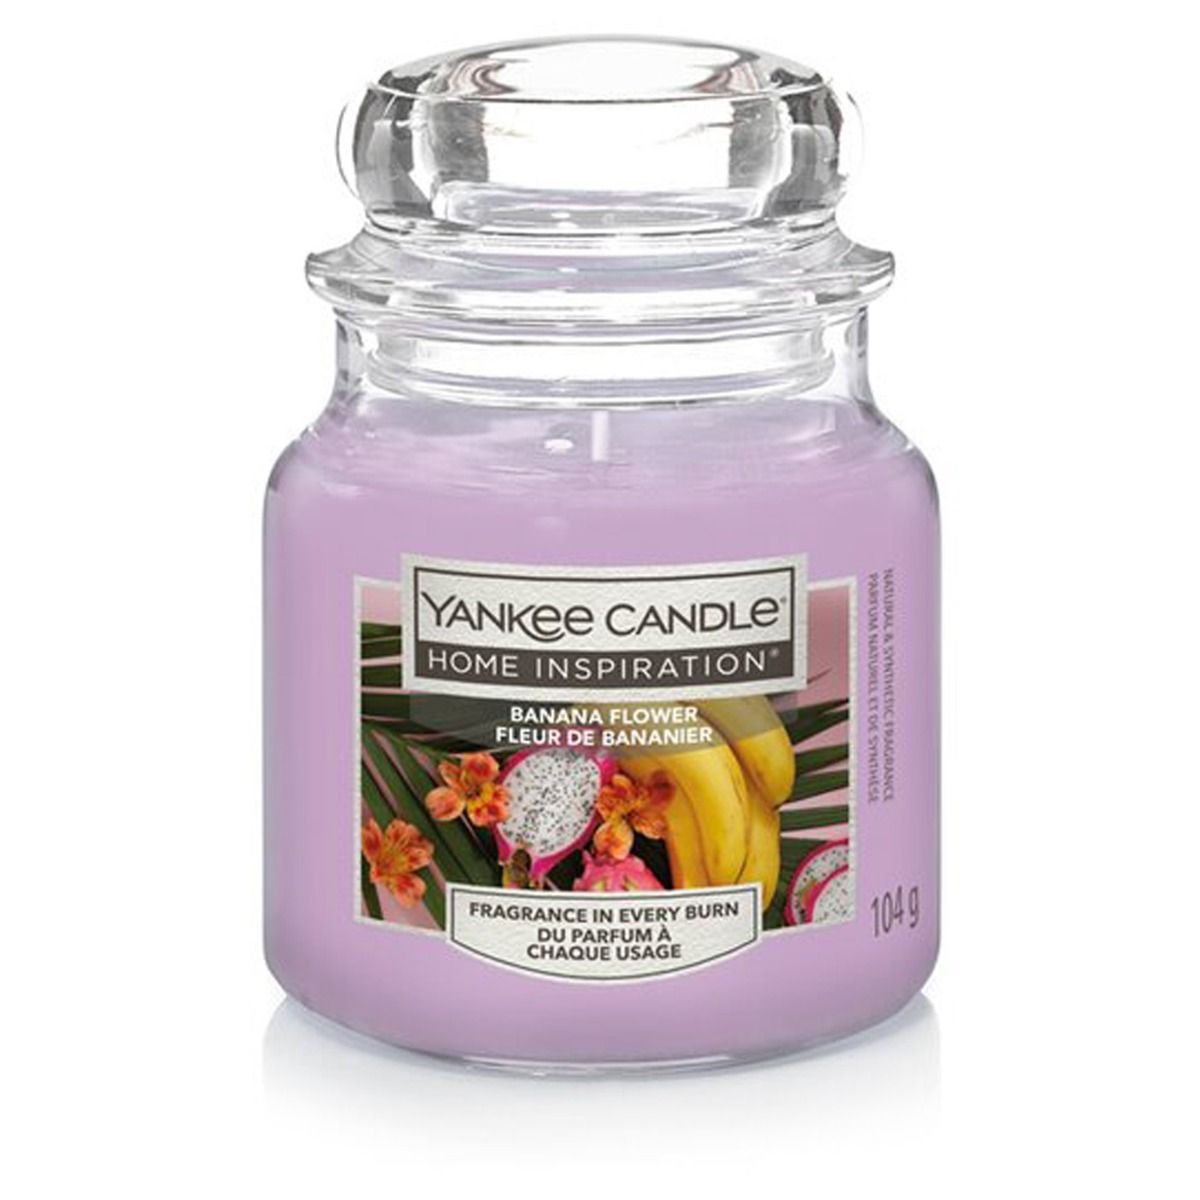 Yankee Candle Home Inspiration Small Jar - Banana Flower